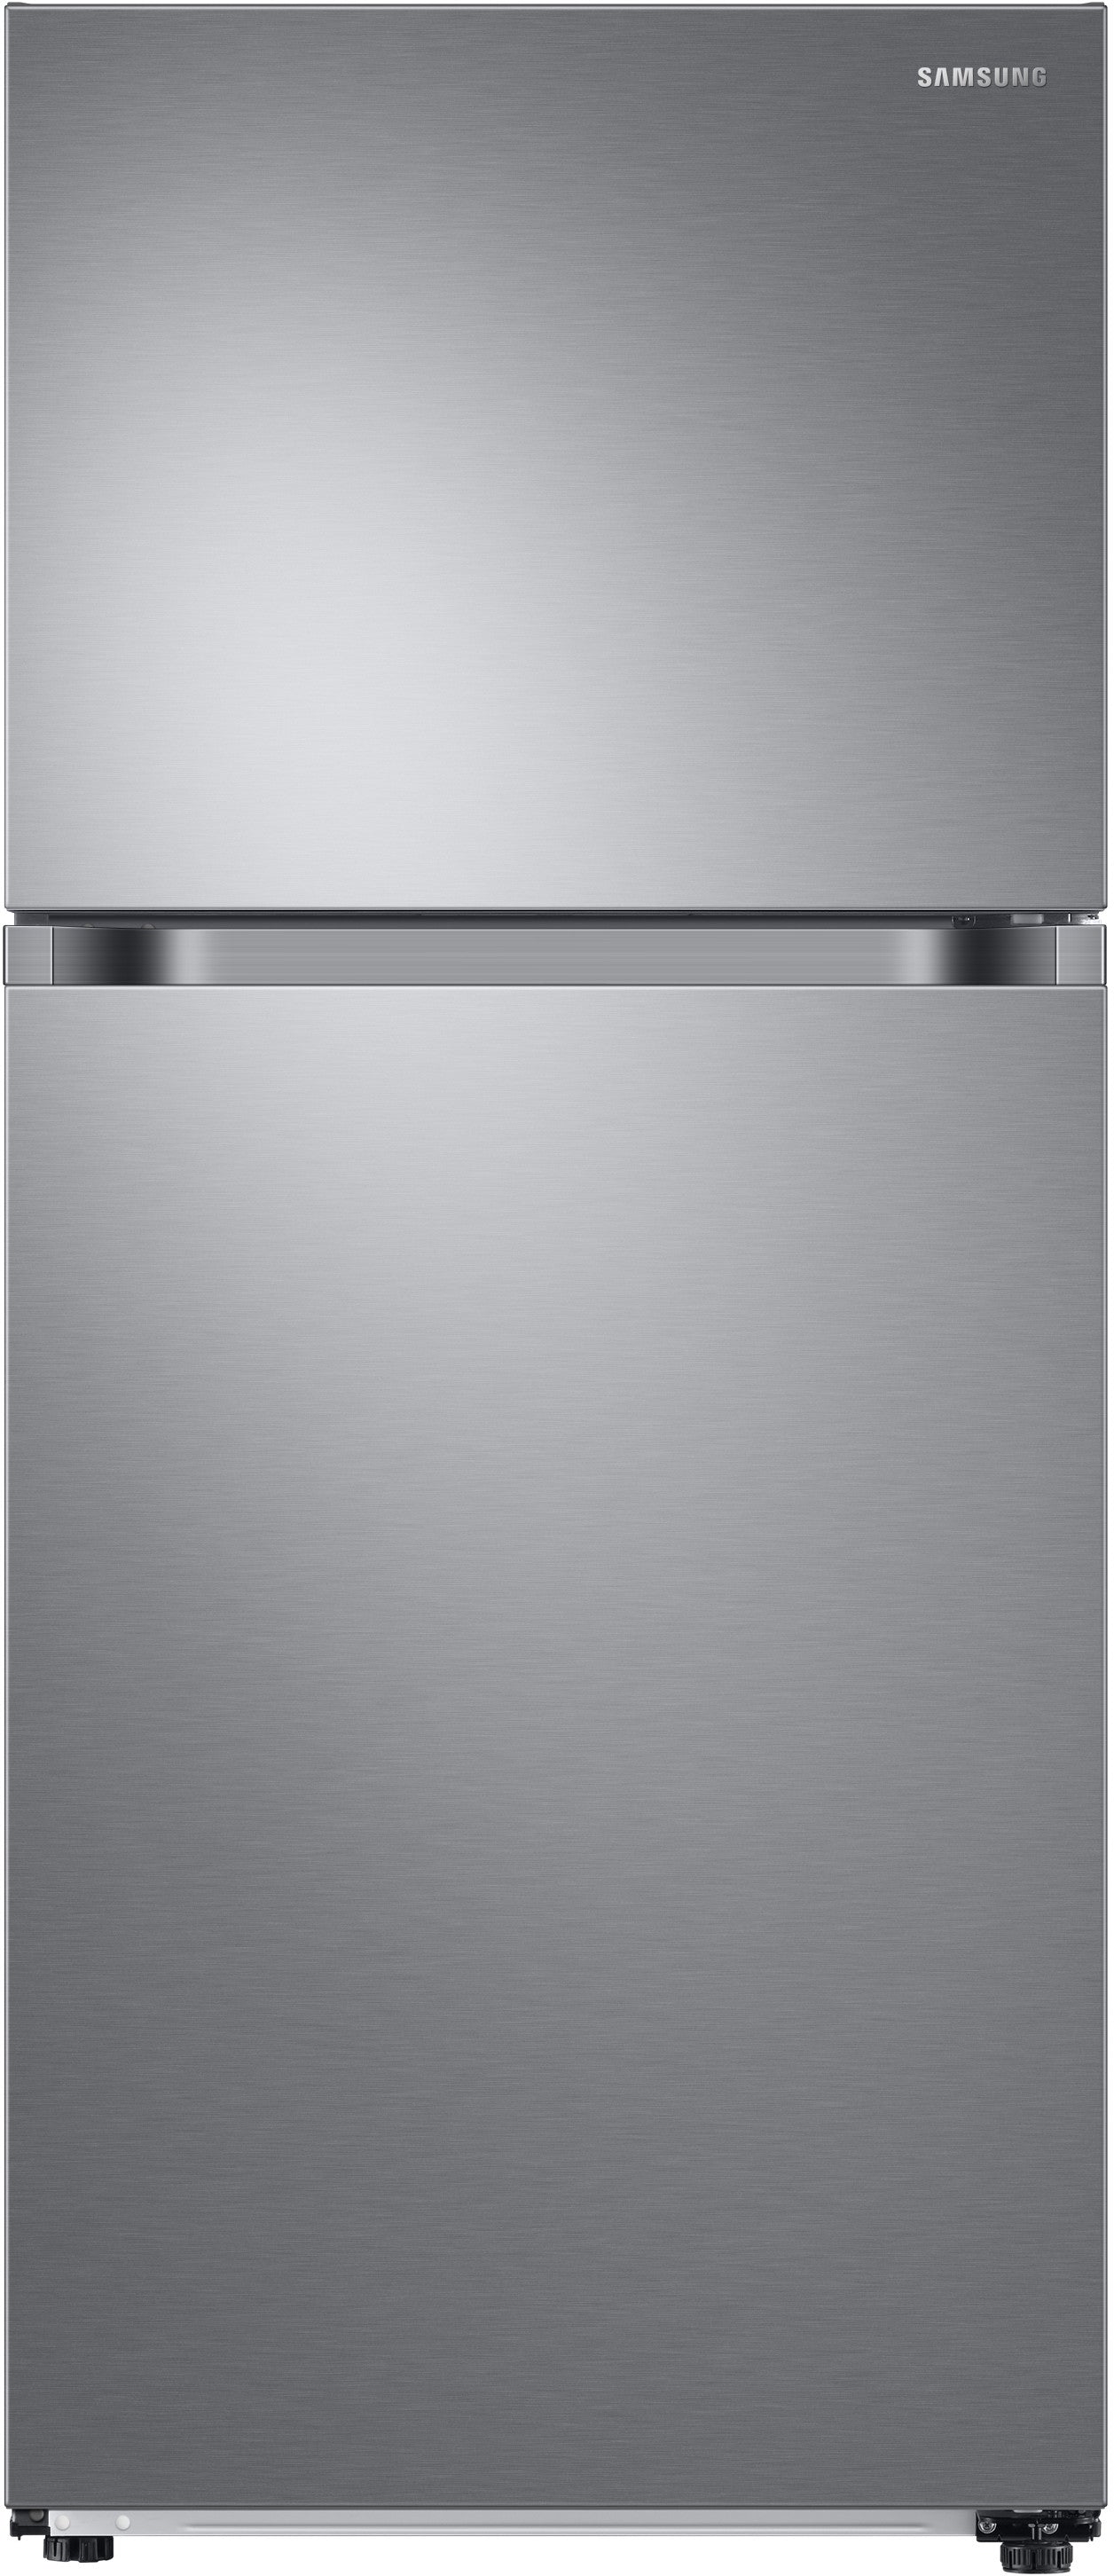 Samsung RT18M6213SR/AA 18 Cu. Ft. Top Freezer Refrigerator With Flex zone - Samsung Parts USA